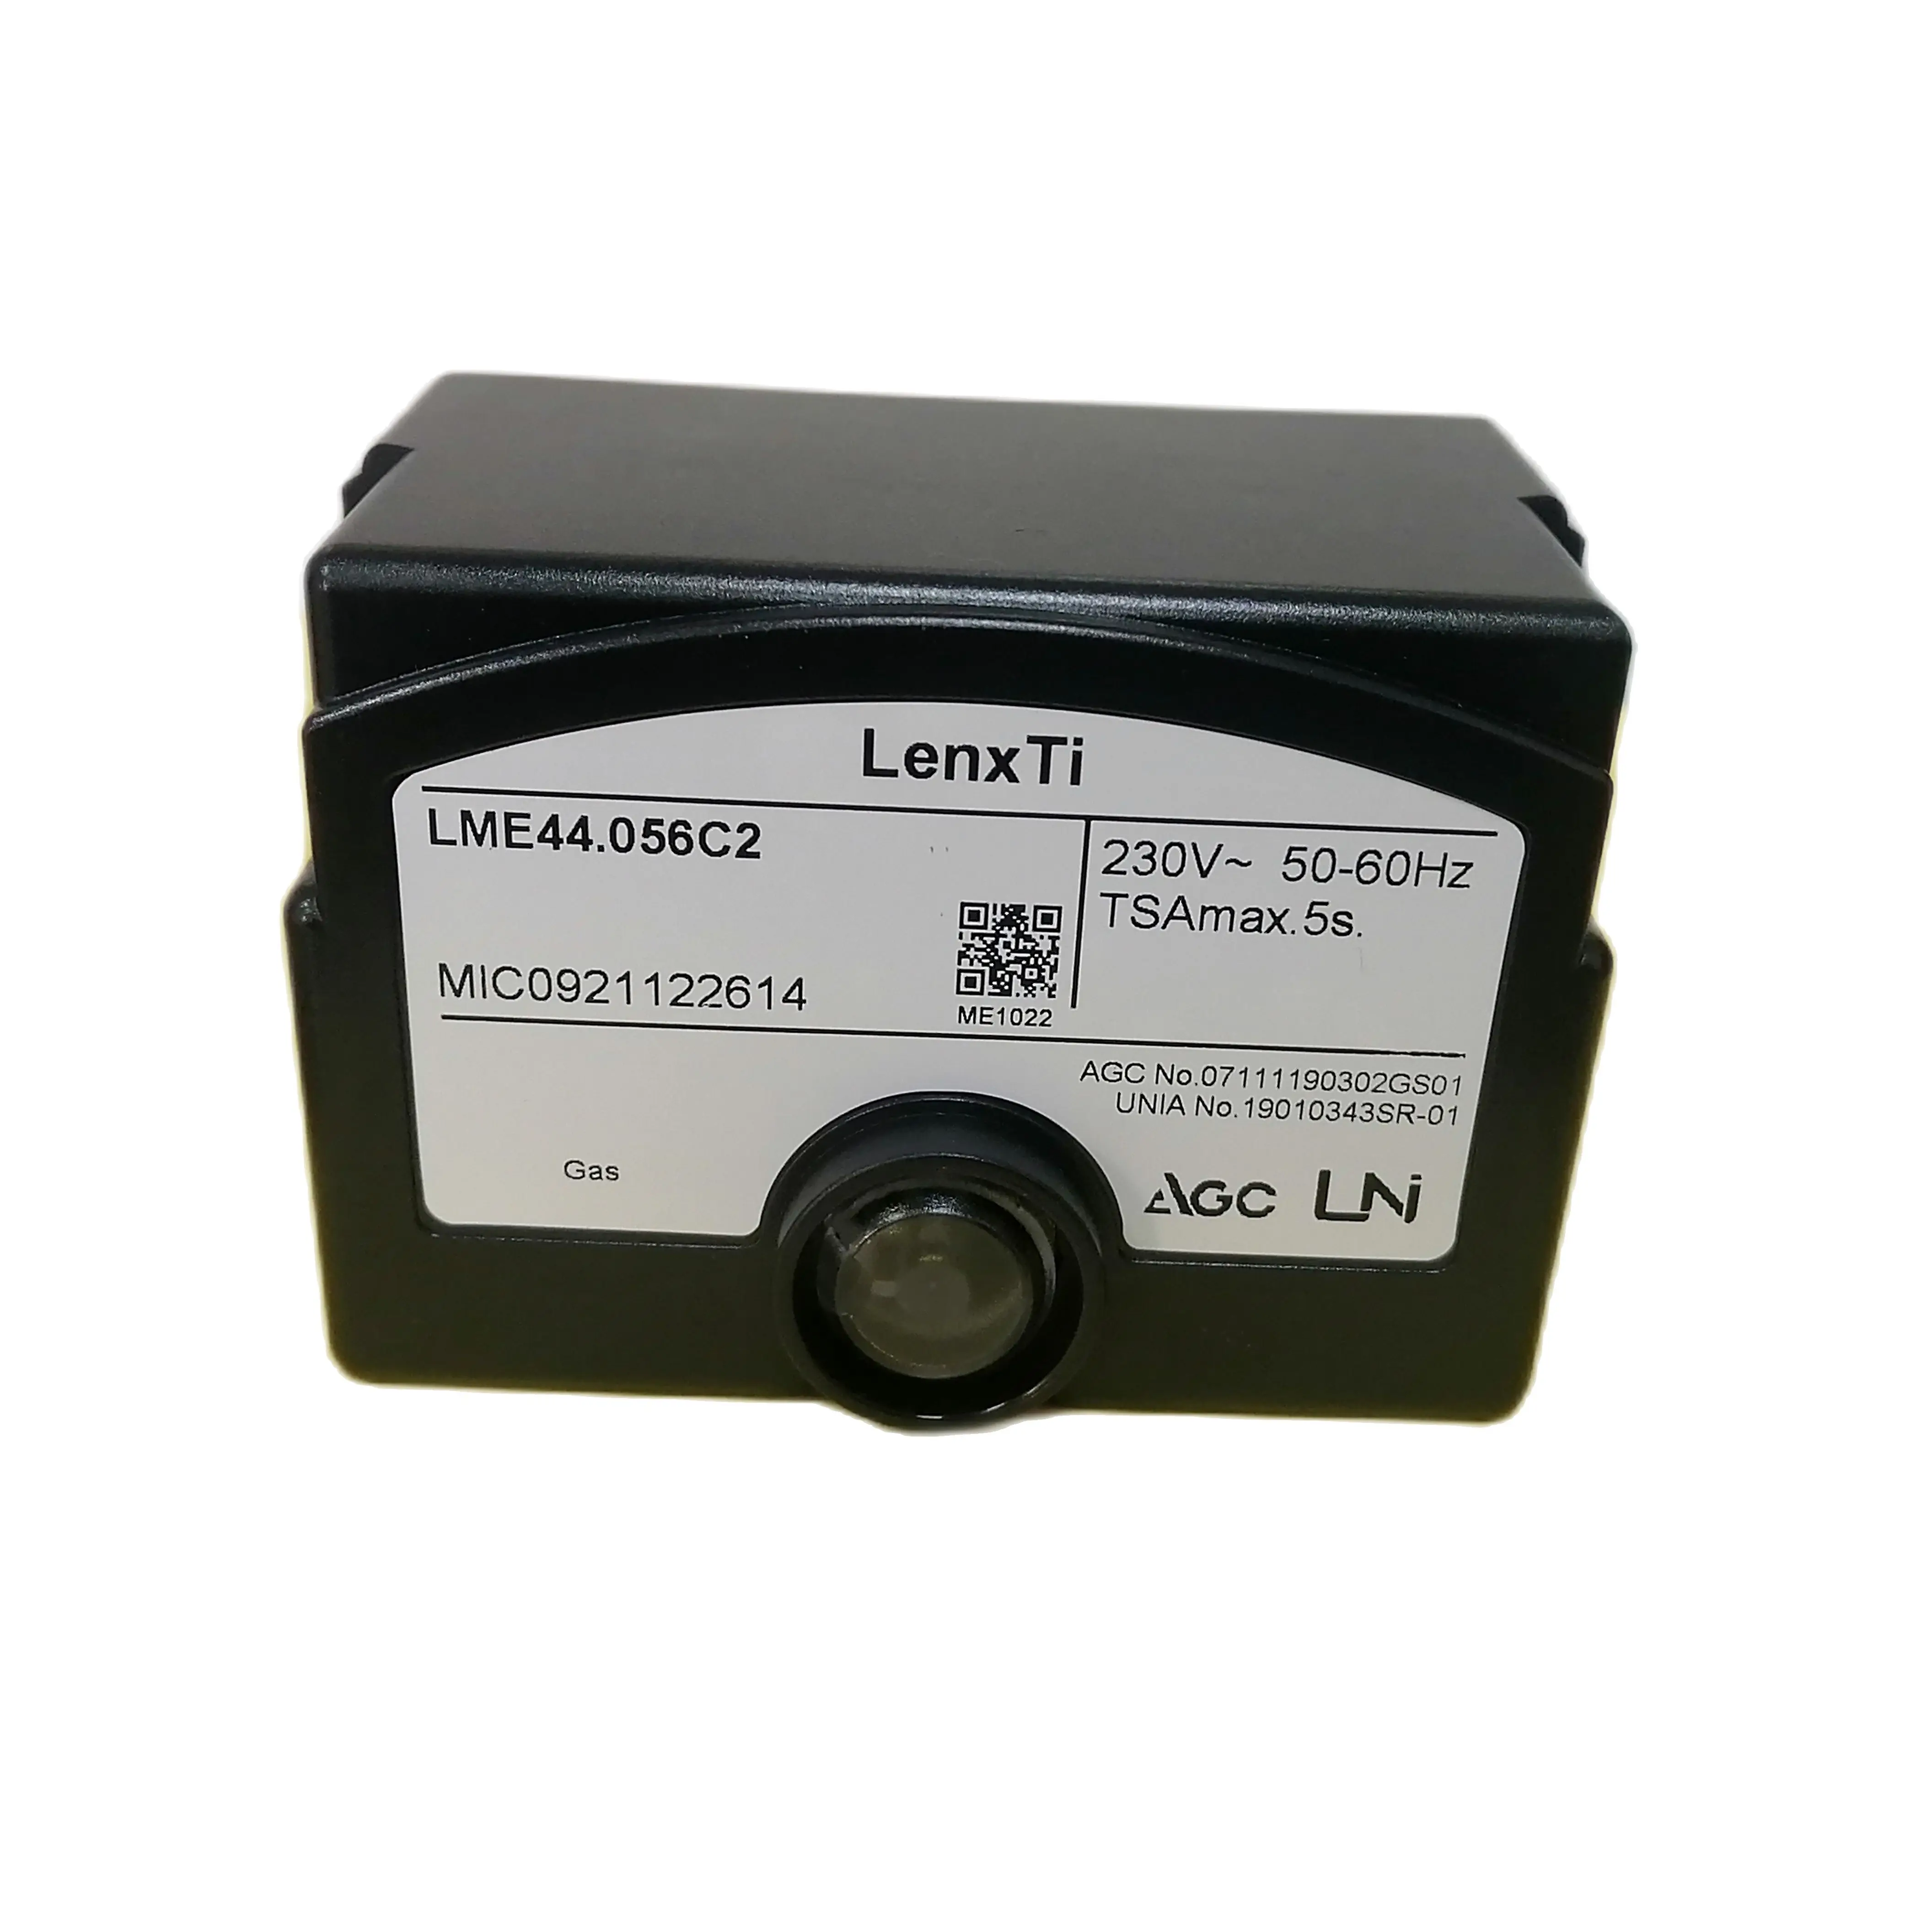 LenxTi LME44.056C2 Burner controls for atmospheric burners Gas firing devices Gas Burner Controls